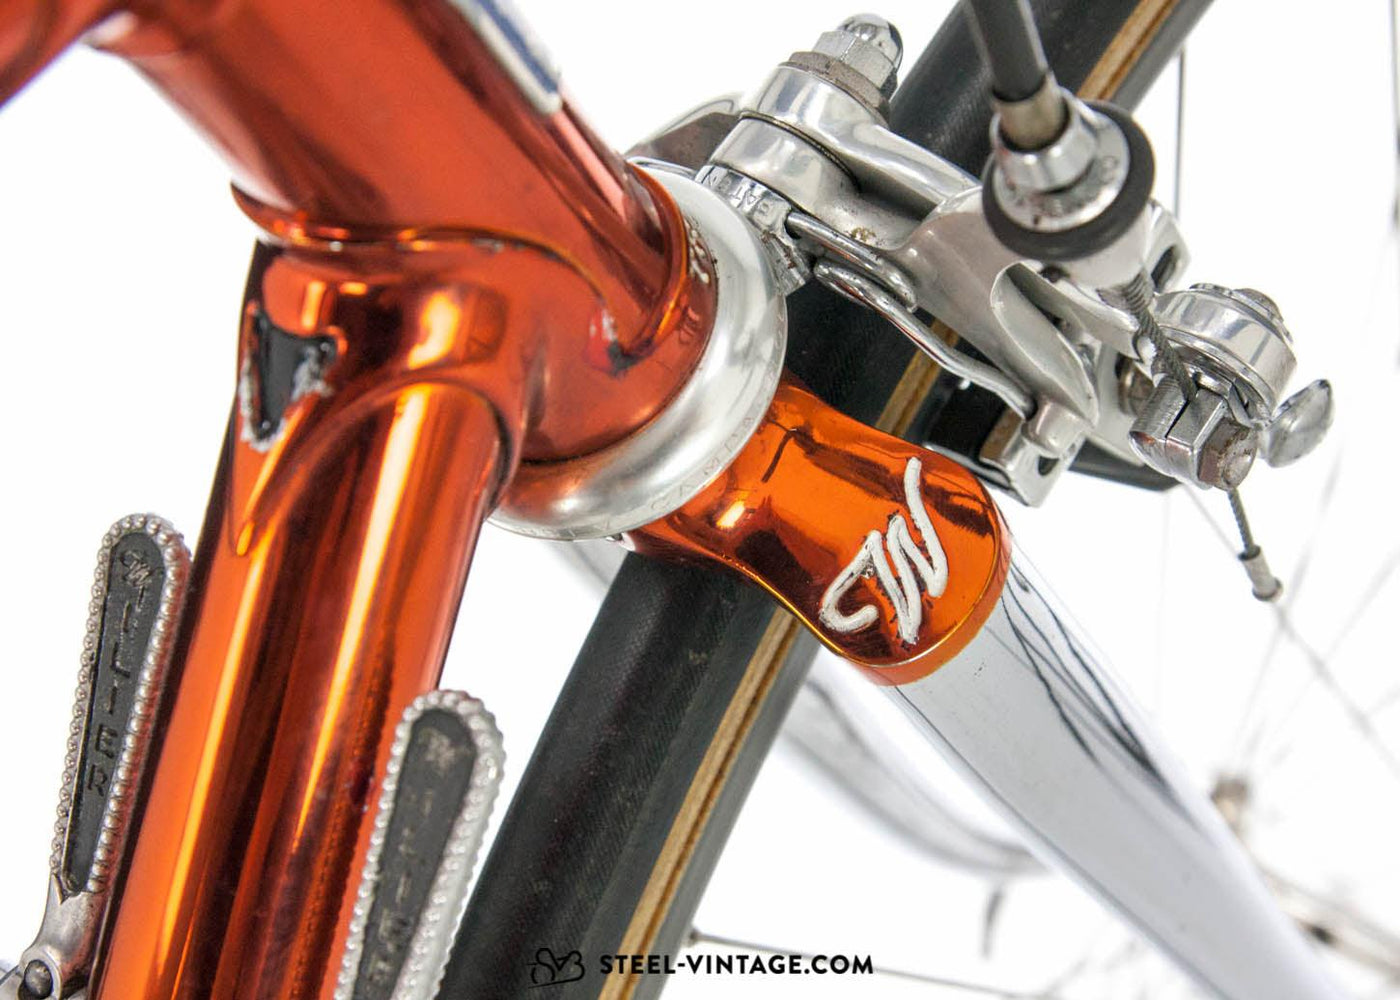 Wilier Triestina Ramata Superleggera Classic Bicycle - Steel Vintage Bikes